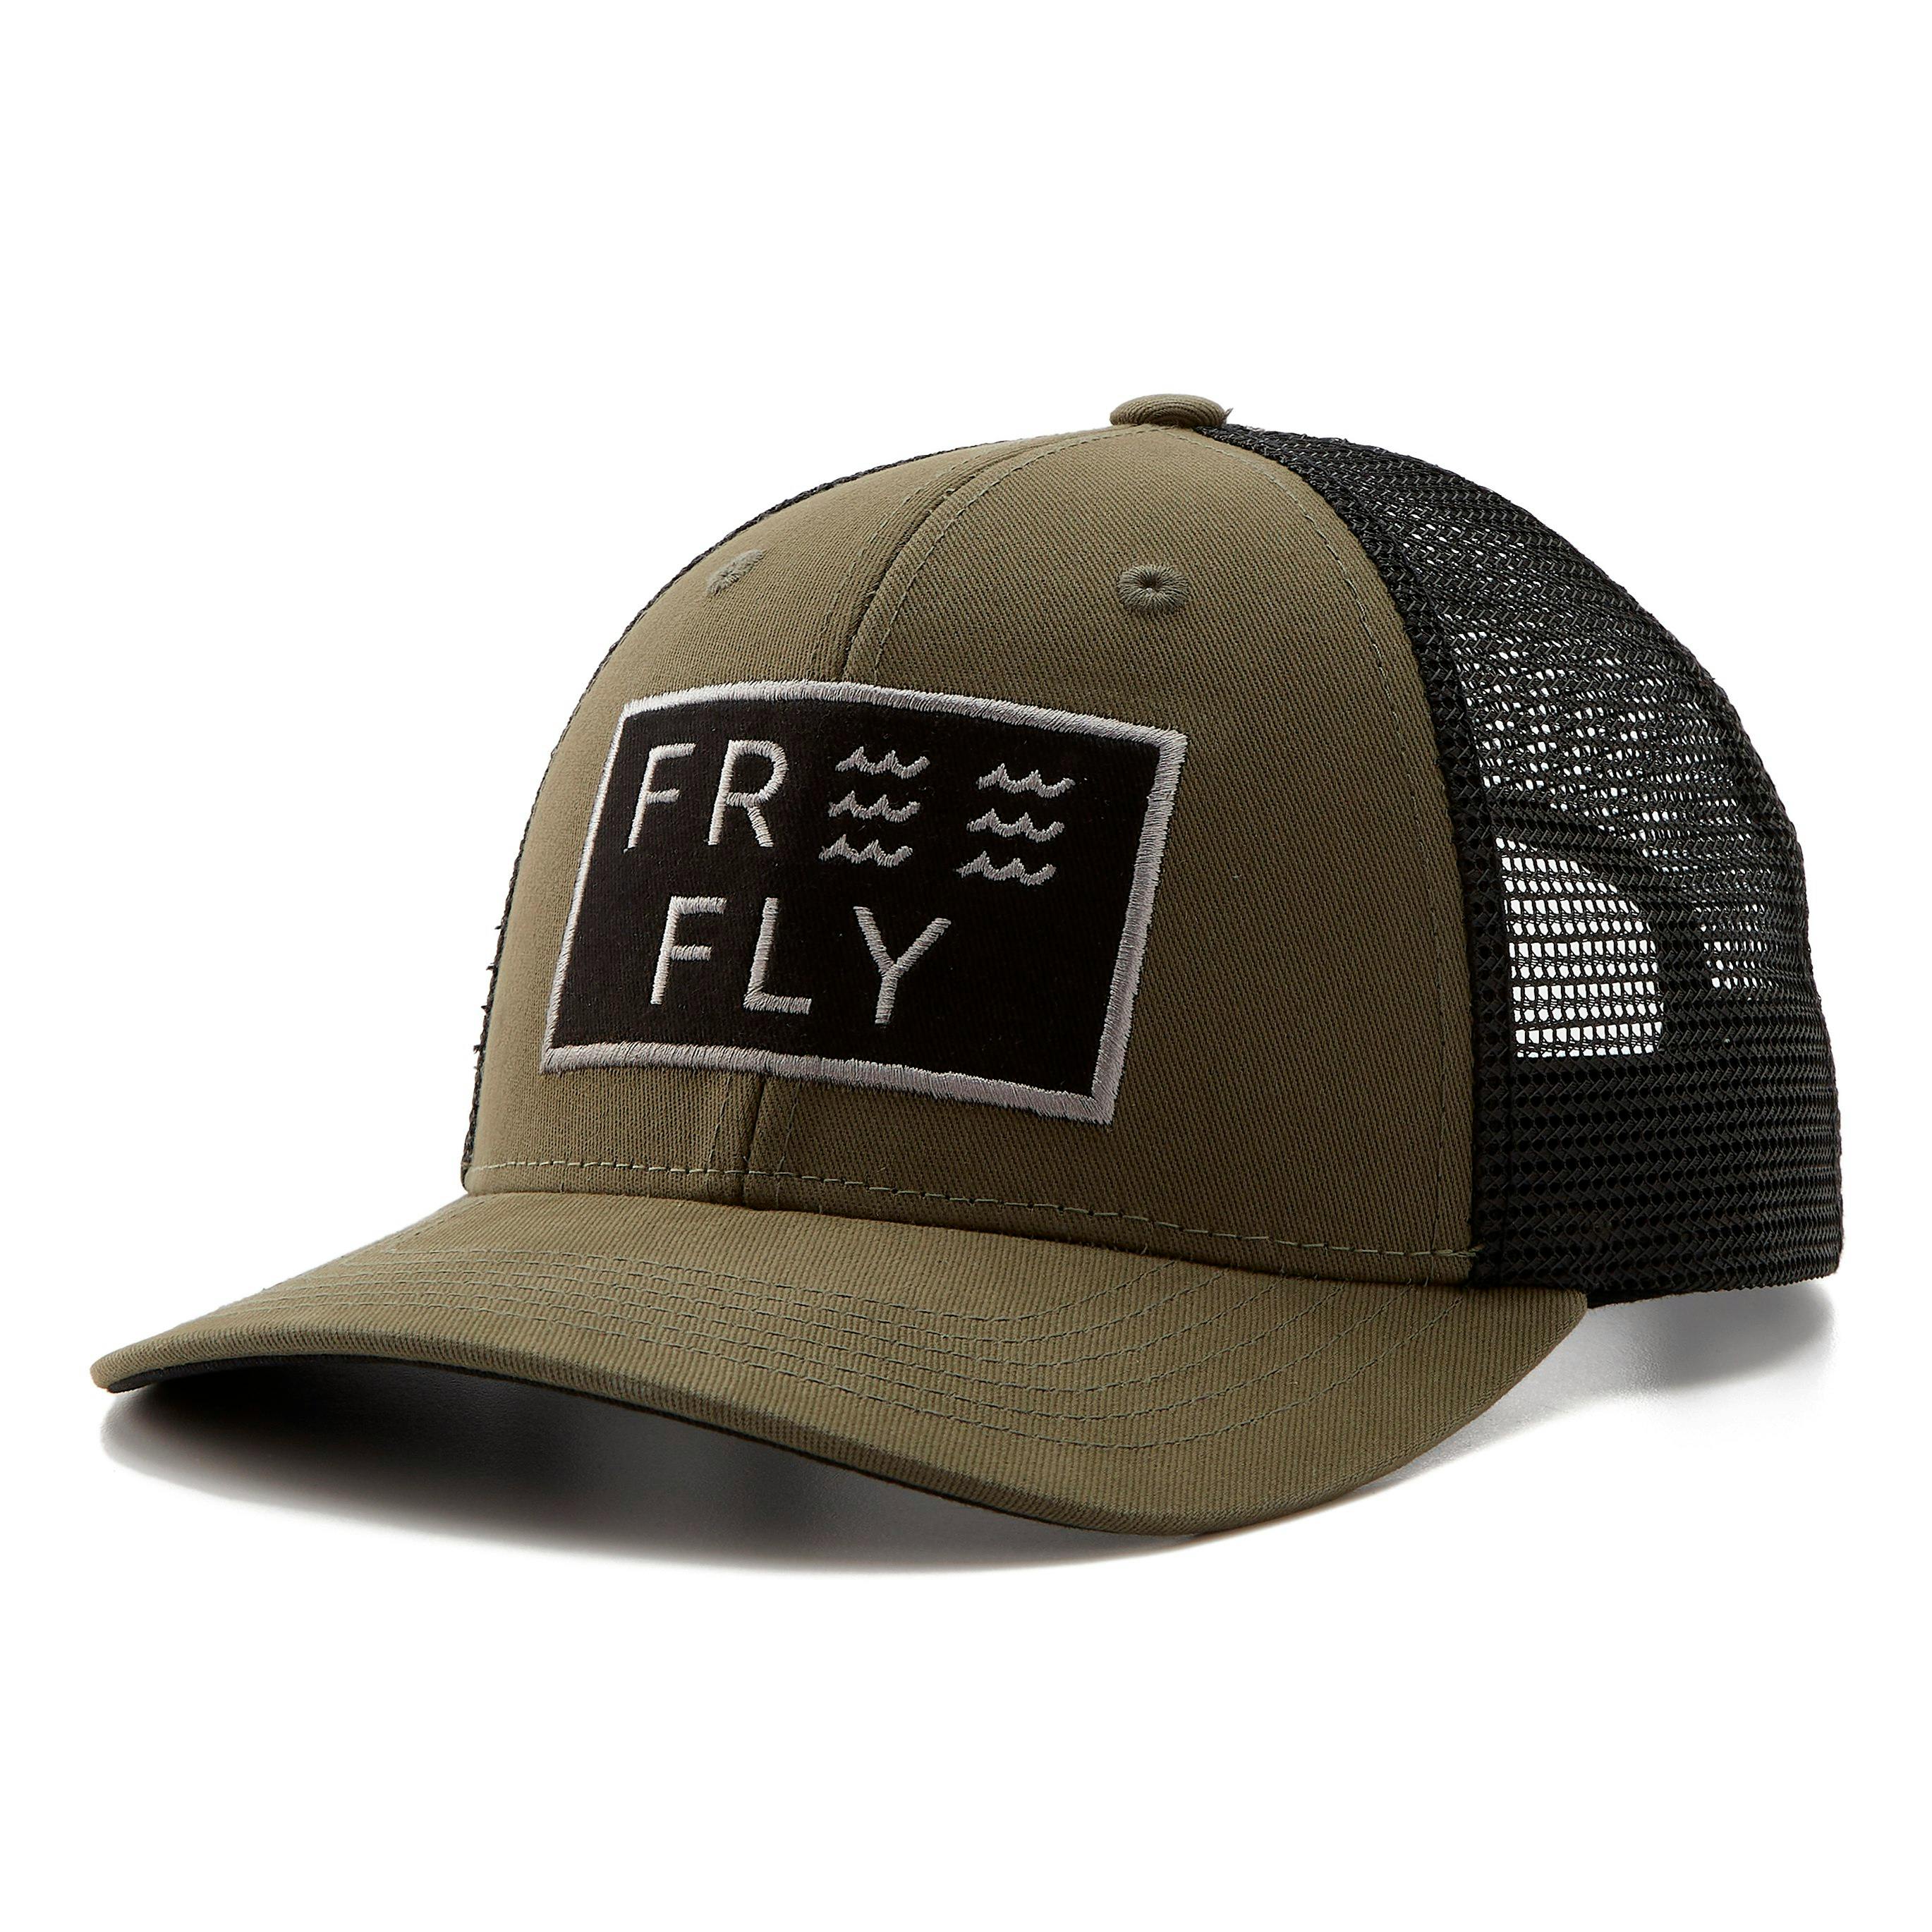 Free Fly Wave Snapback Hat - Fatigue, Baseball Caps